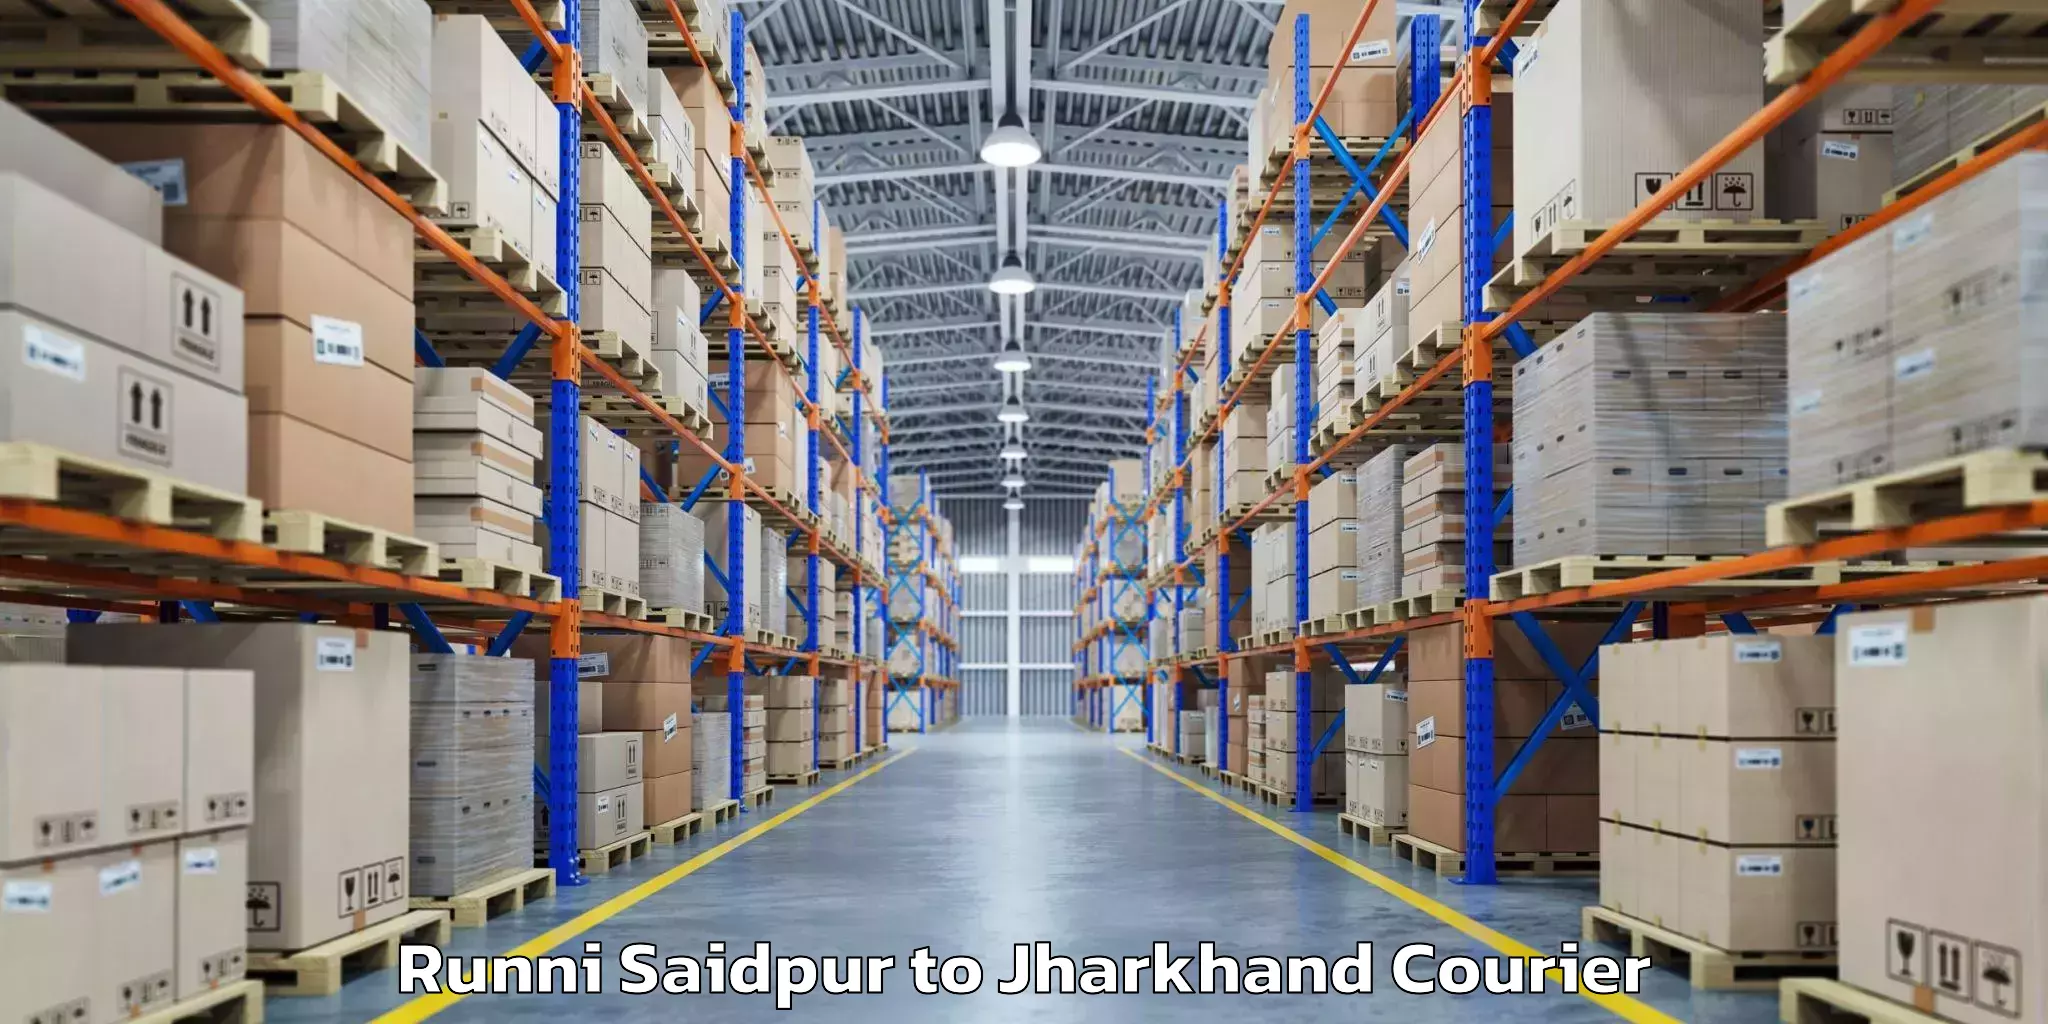 Luggage shipment processing Runni Saidpur to Domchanch